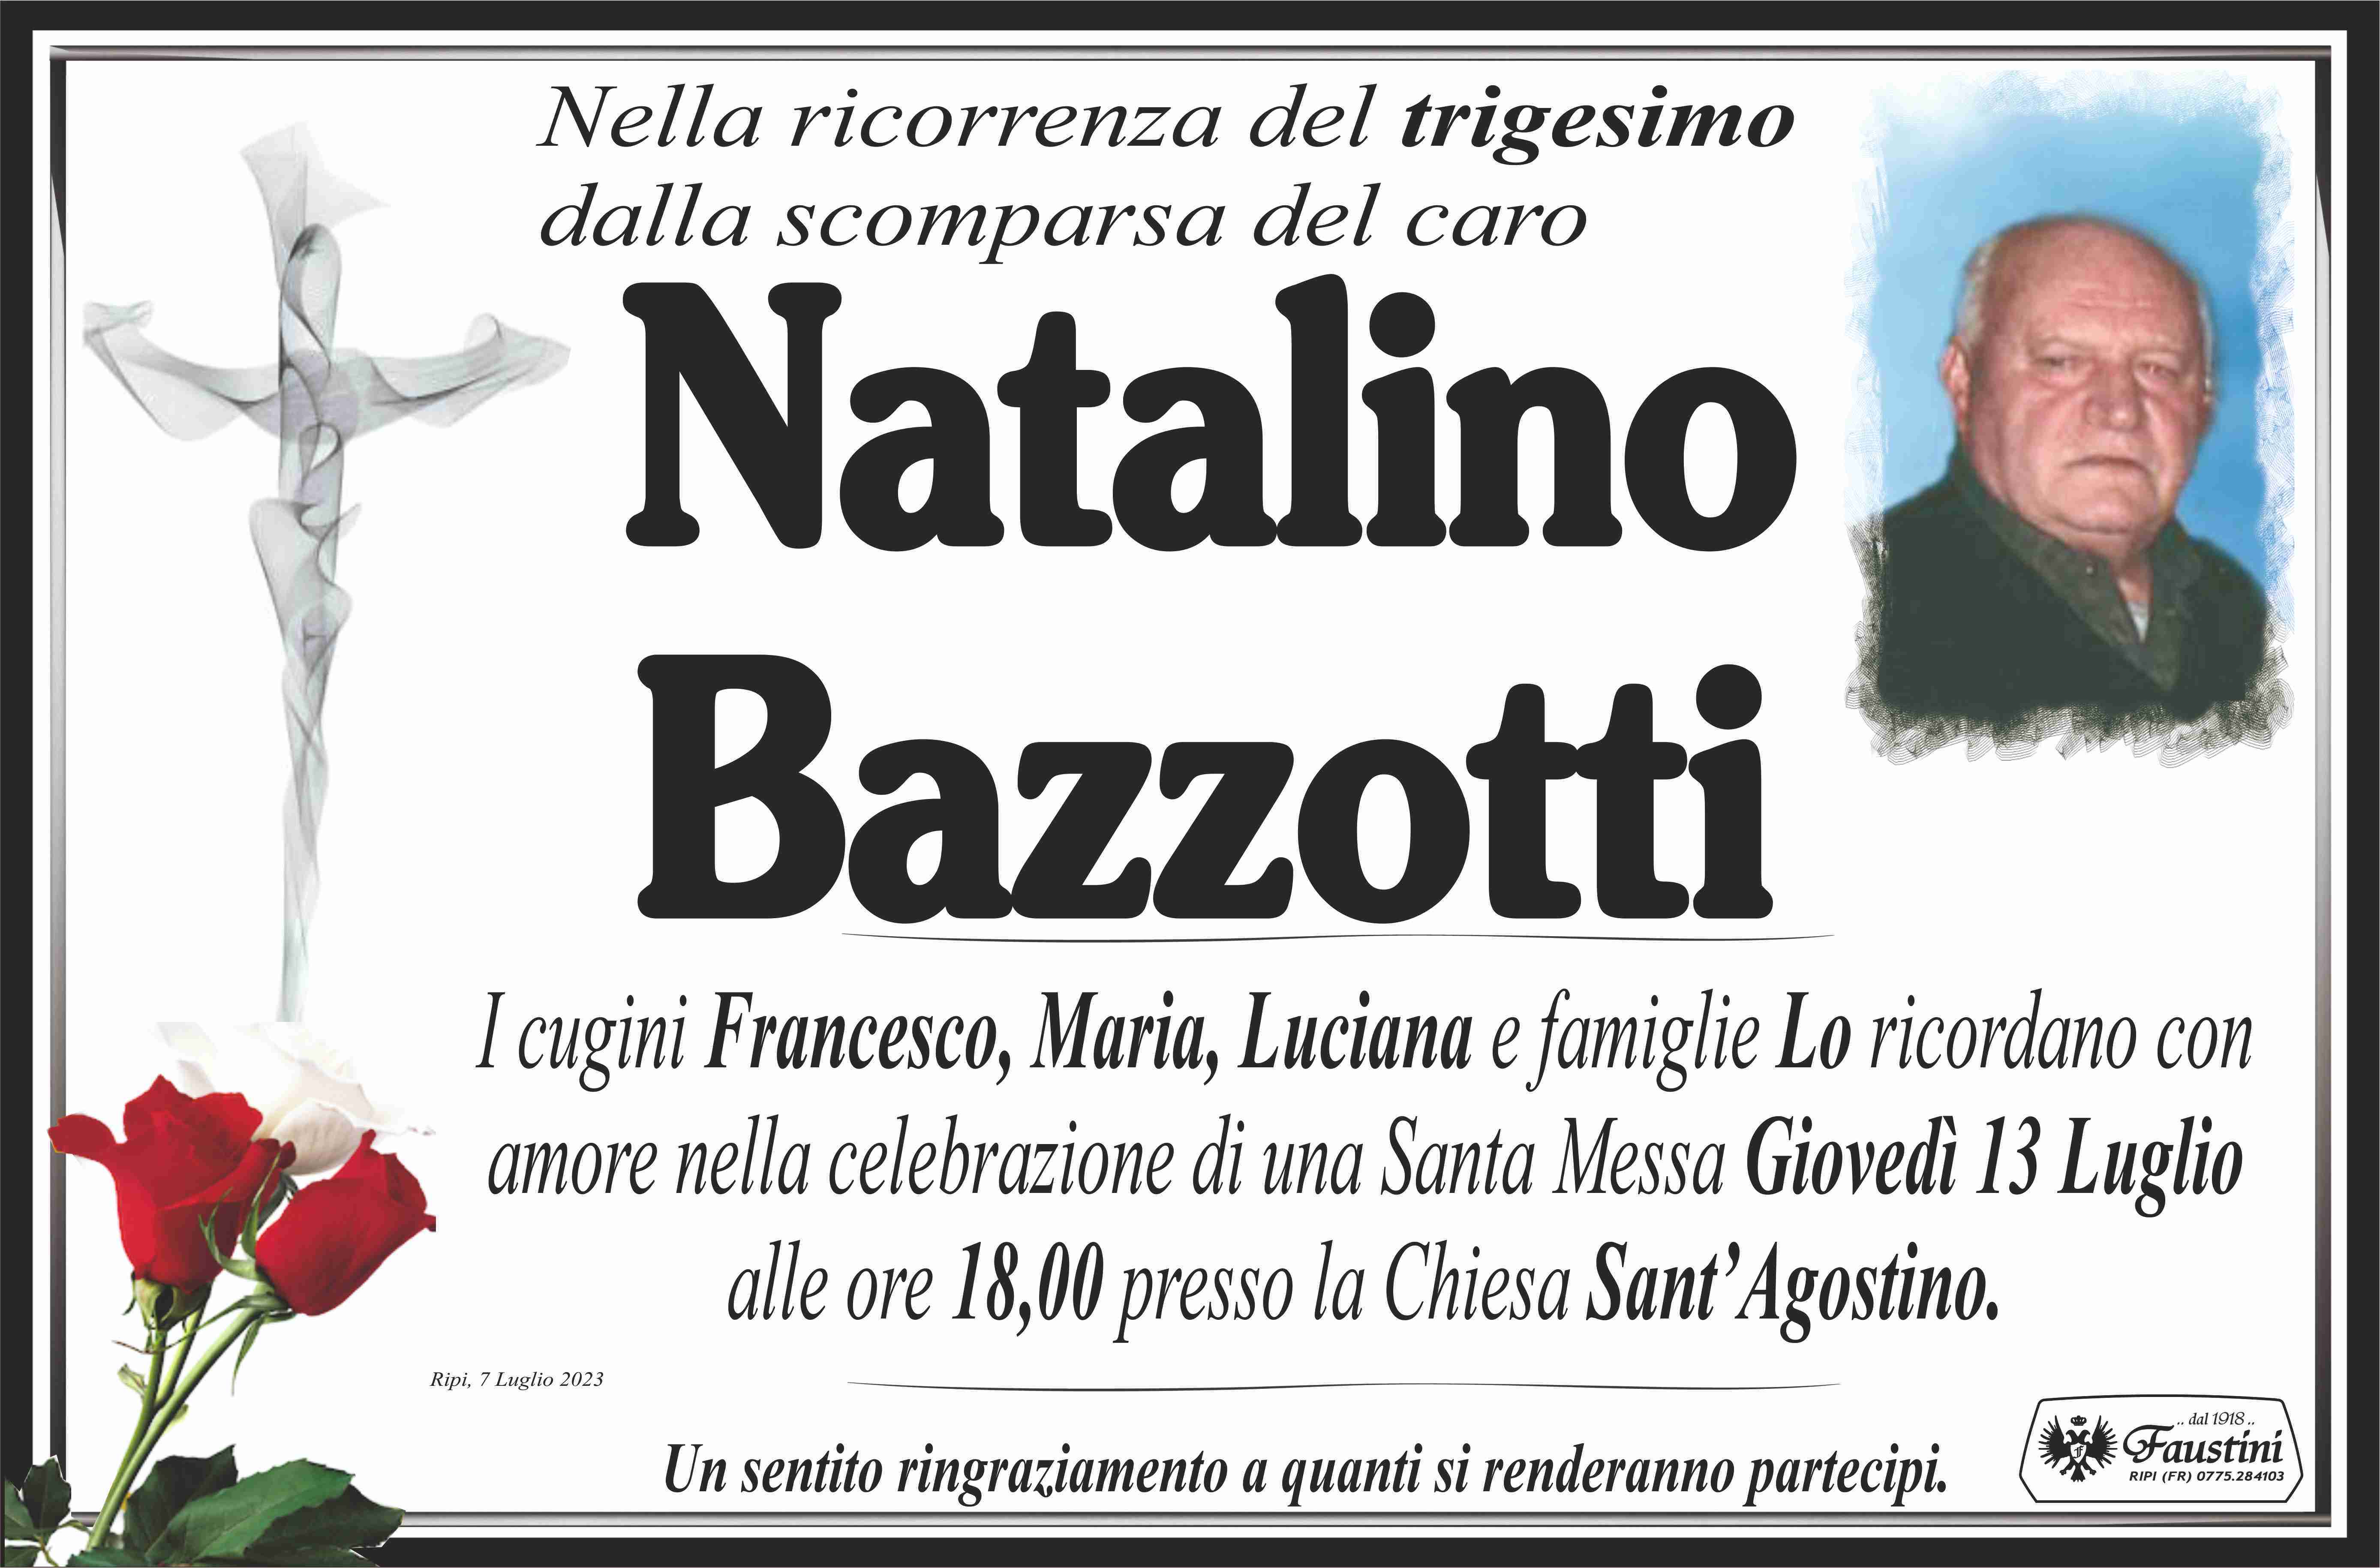 Natalino Bazzotti